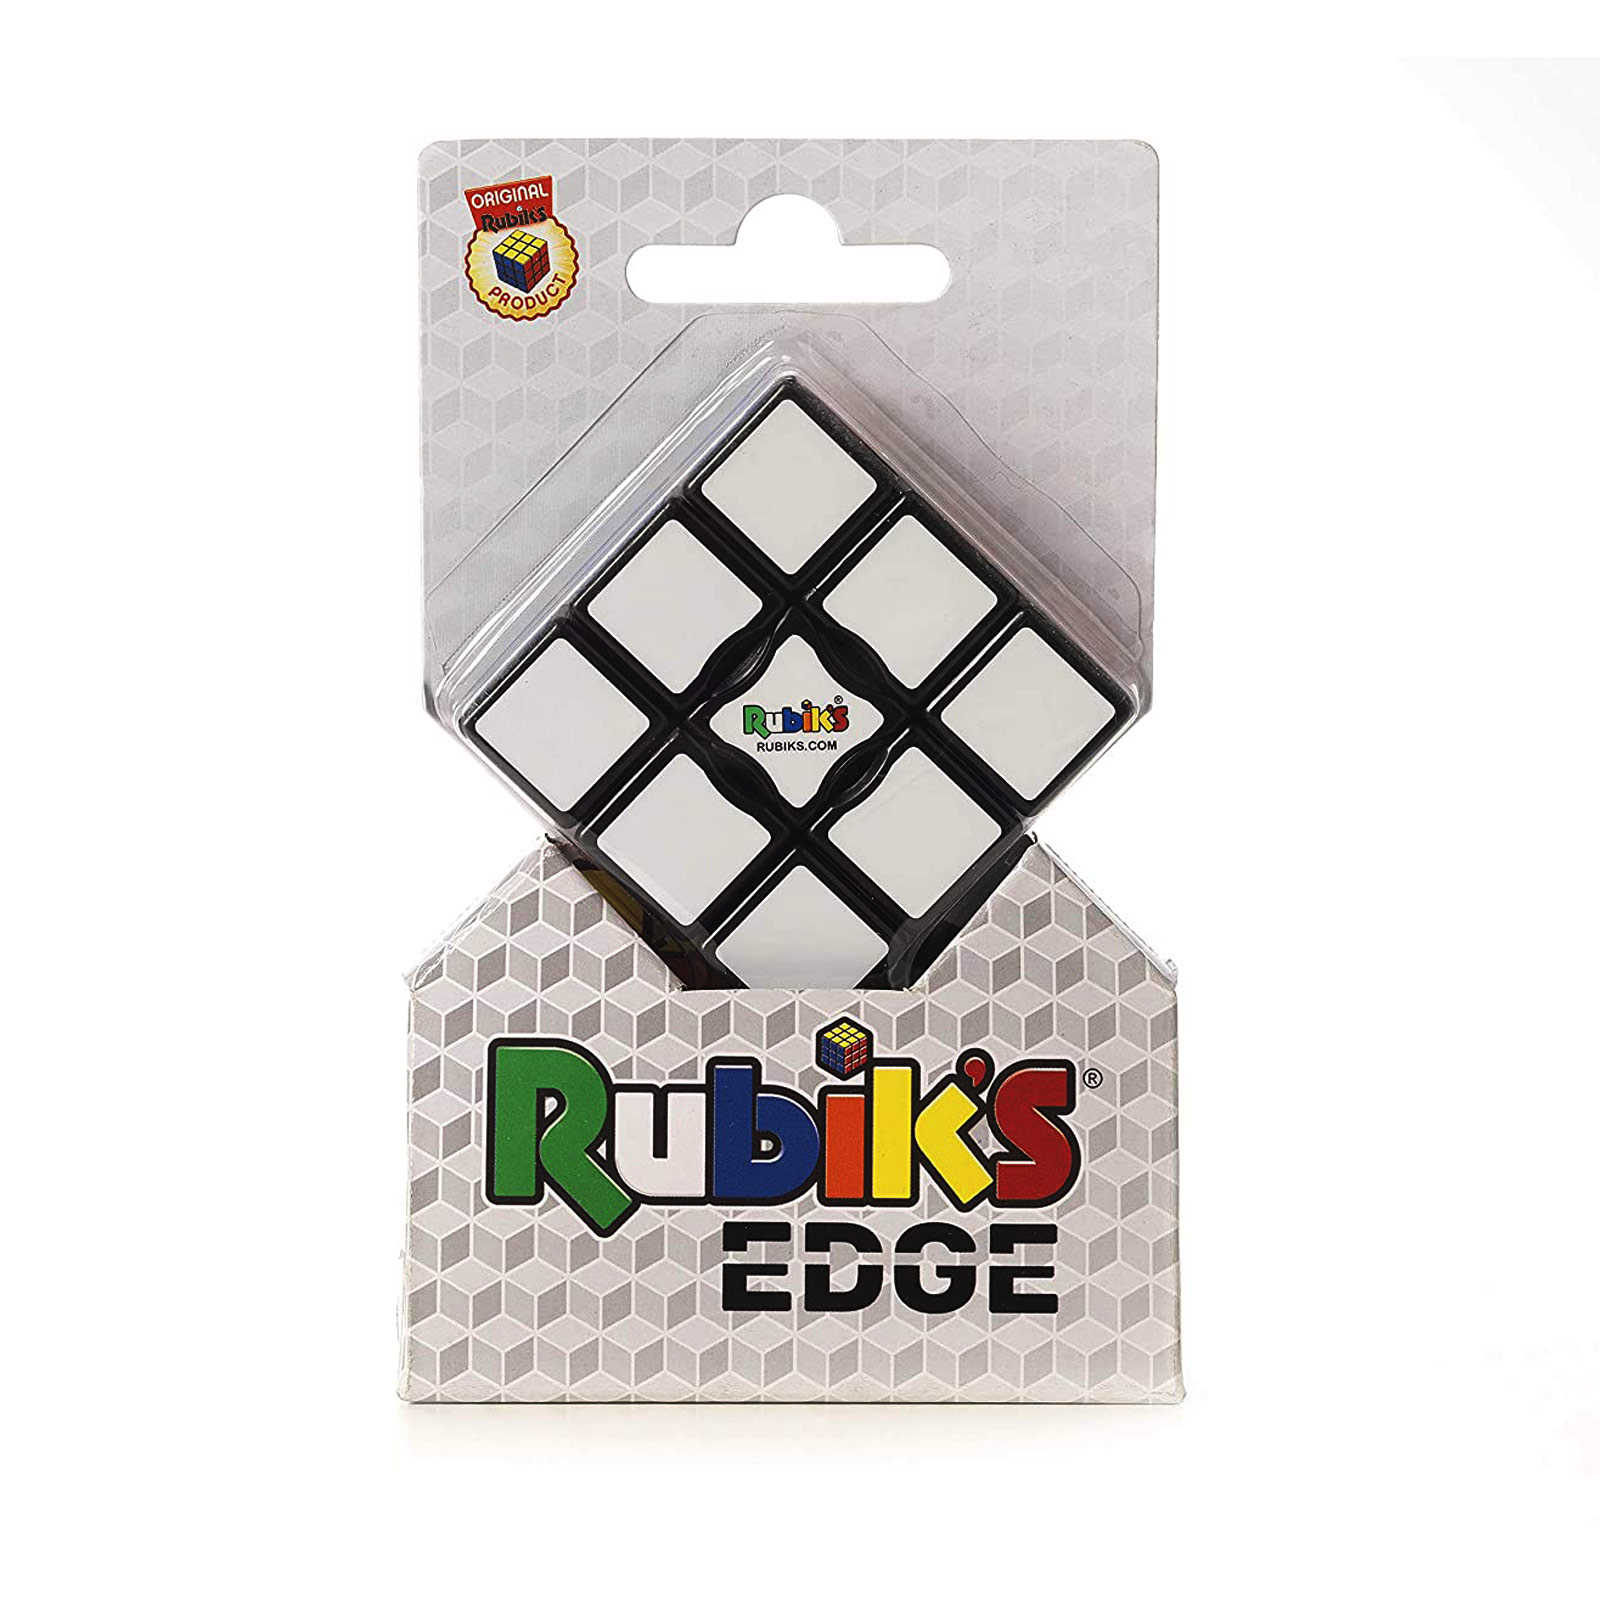 Rubiks Edge